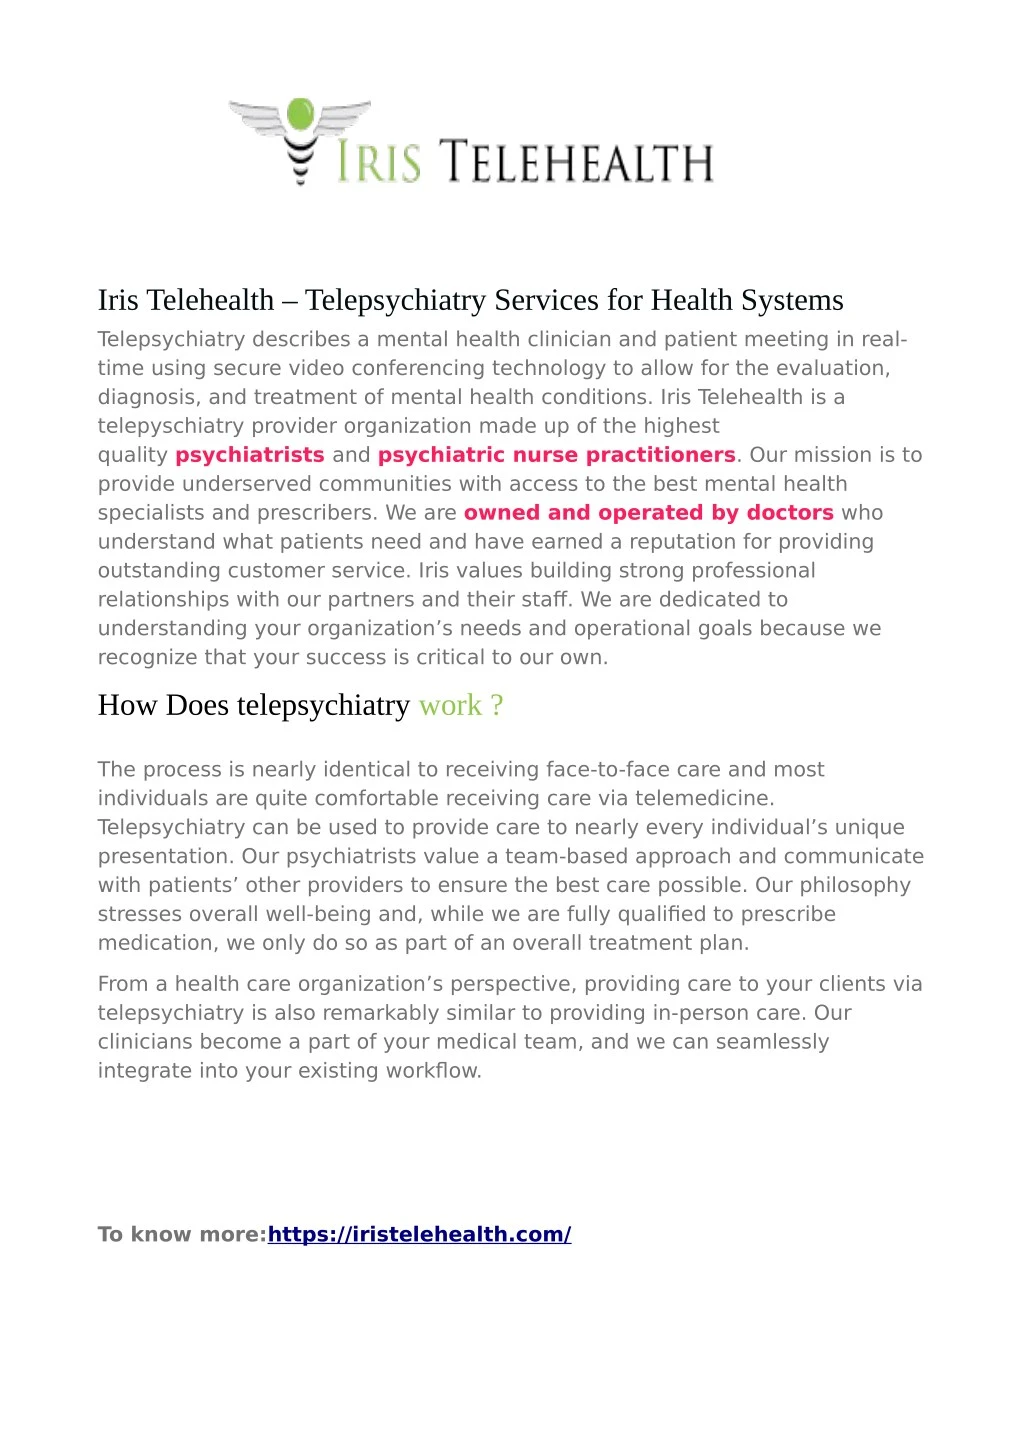 iris telehealth telepsychiatry services